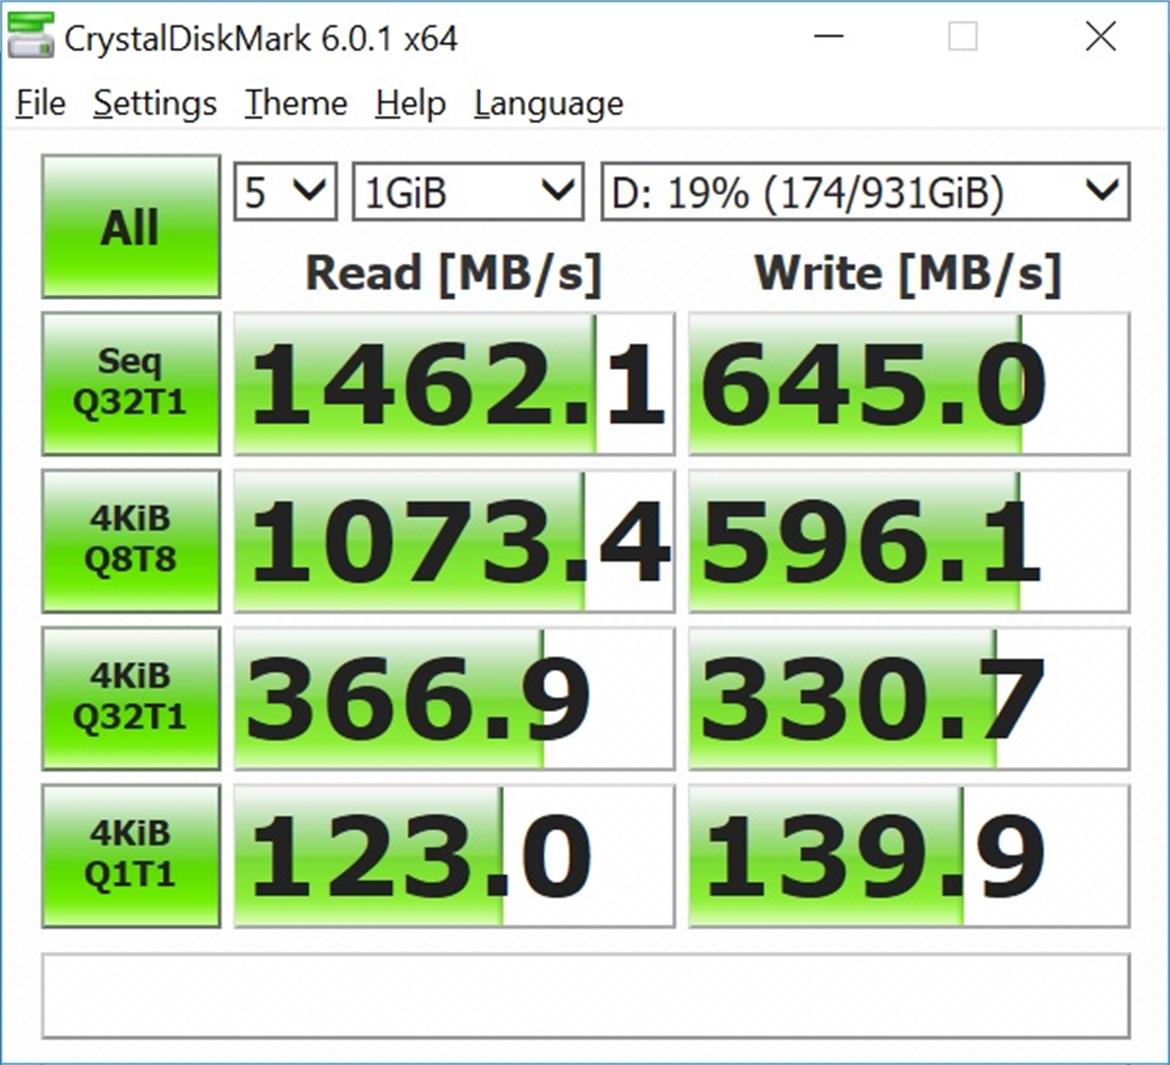 Intel Optane Memory Update: Making Hard Drives Perform Like Fast SSDs